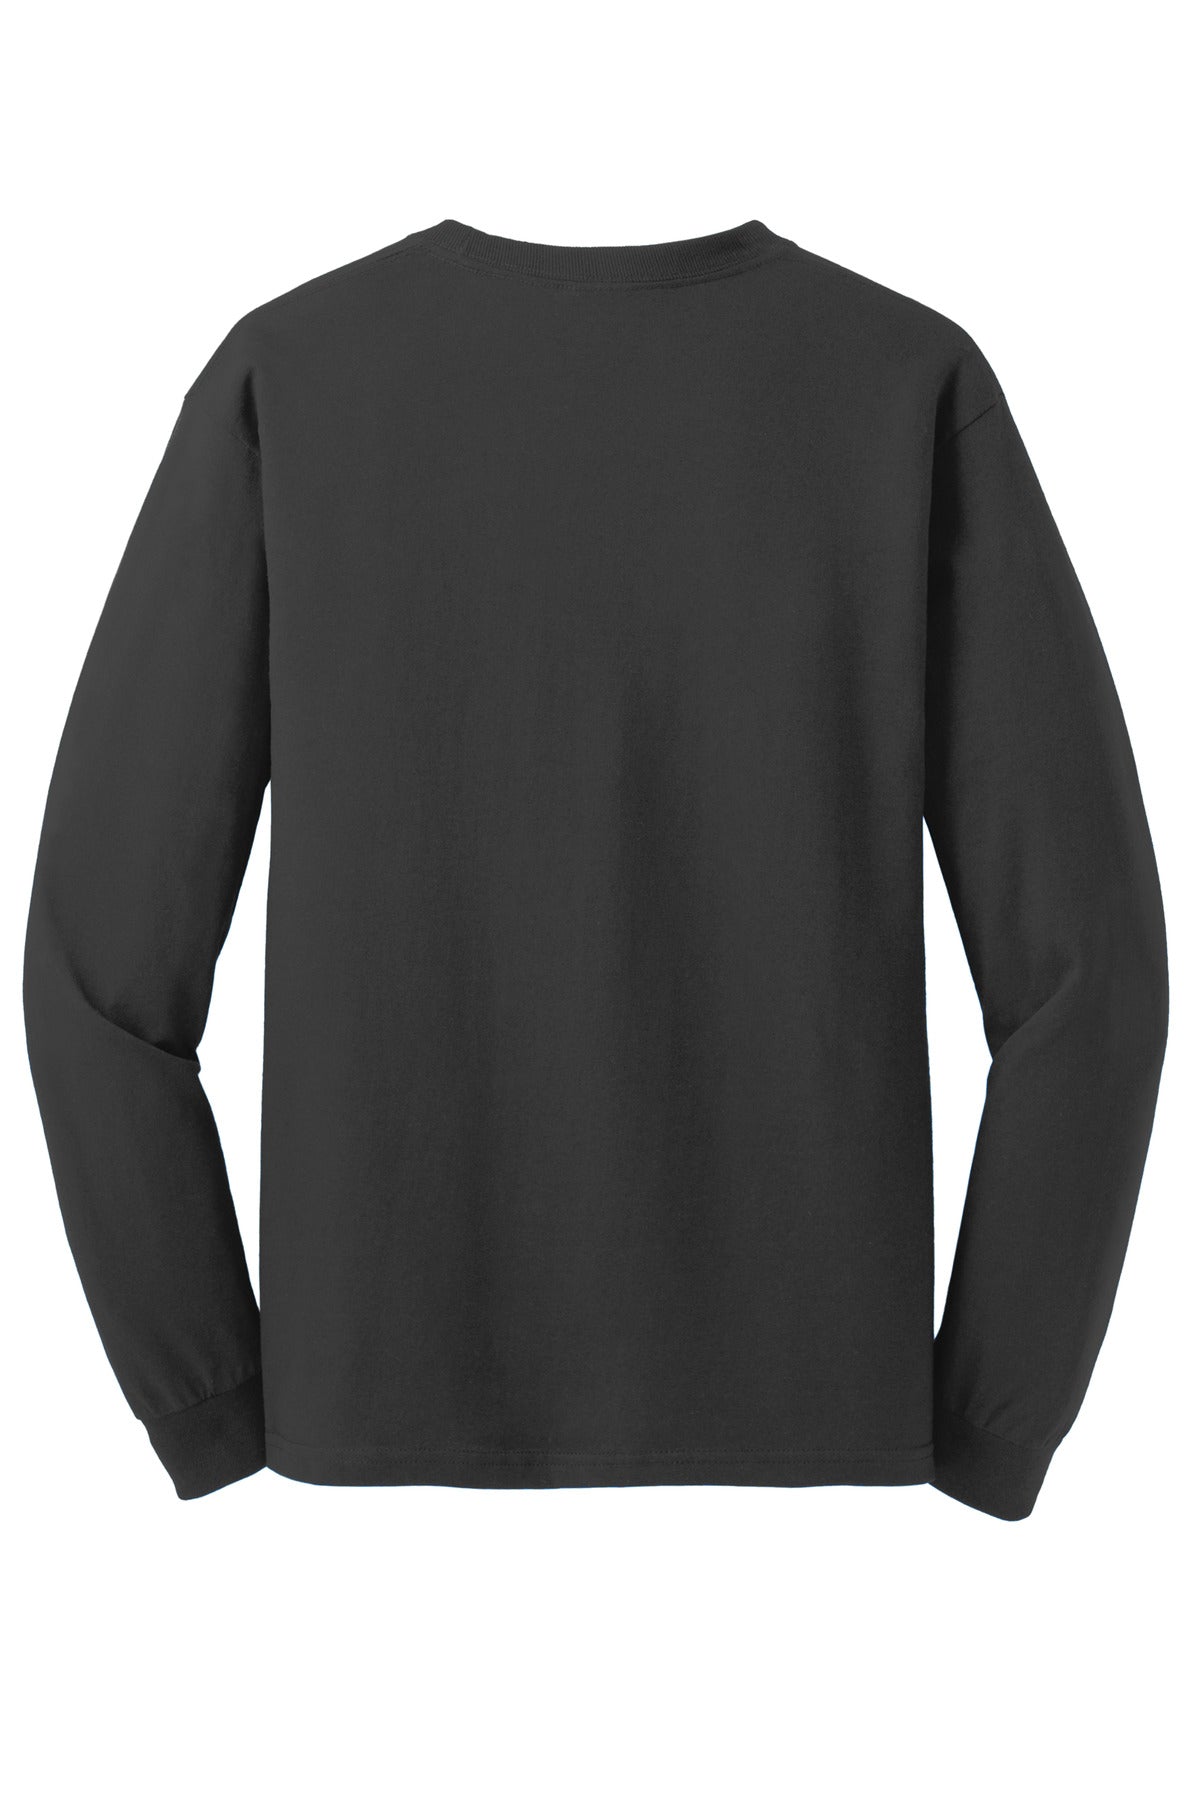 Gildan - Heavy Cotton™ 100% Cotton Long Sleeve T-Shirt. 5400